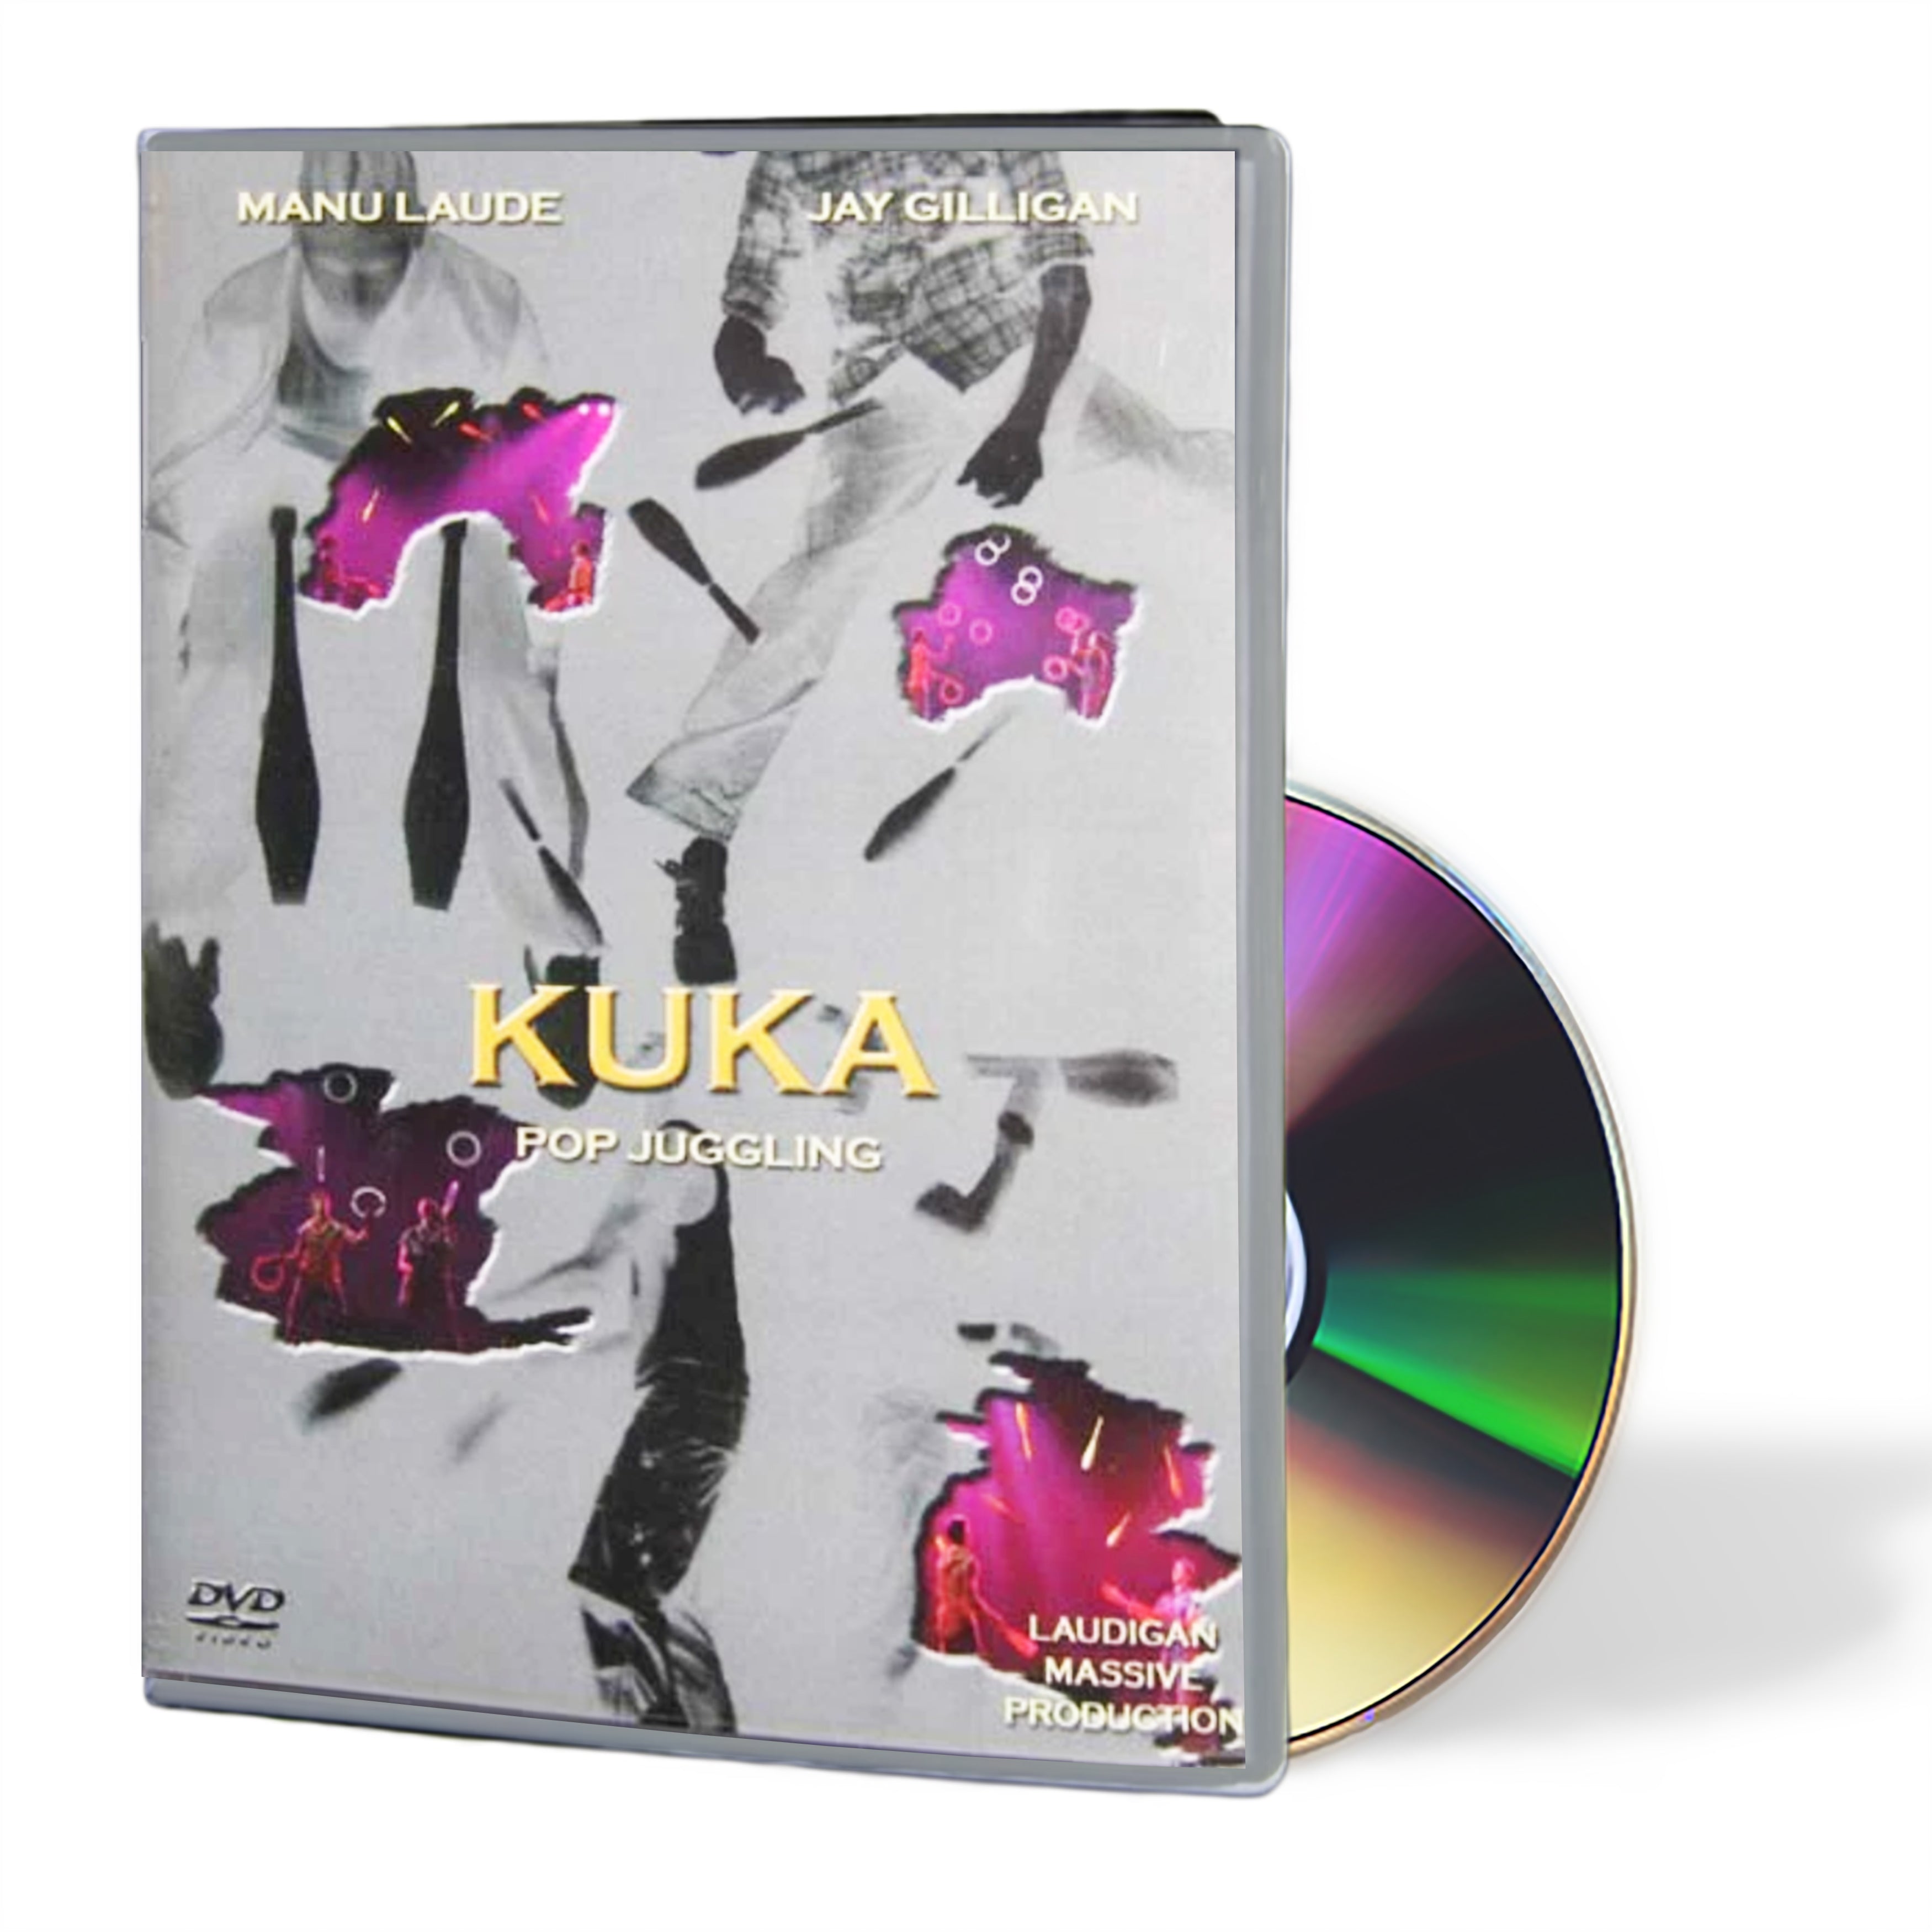 KUKA Pop Juggling DVD (Club Juggling DVD)